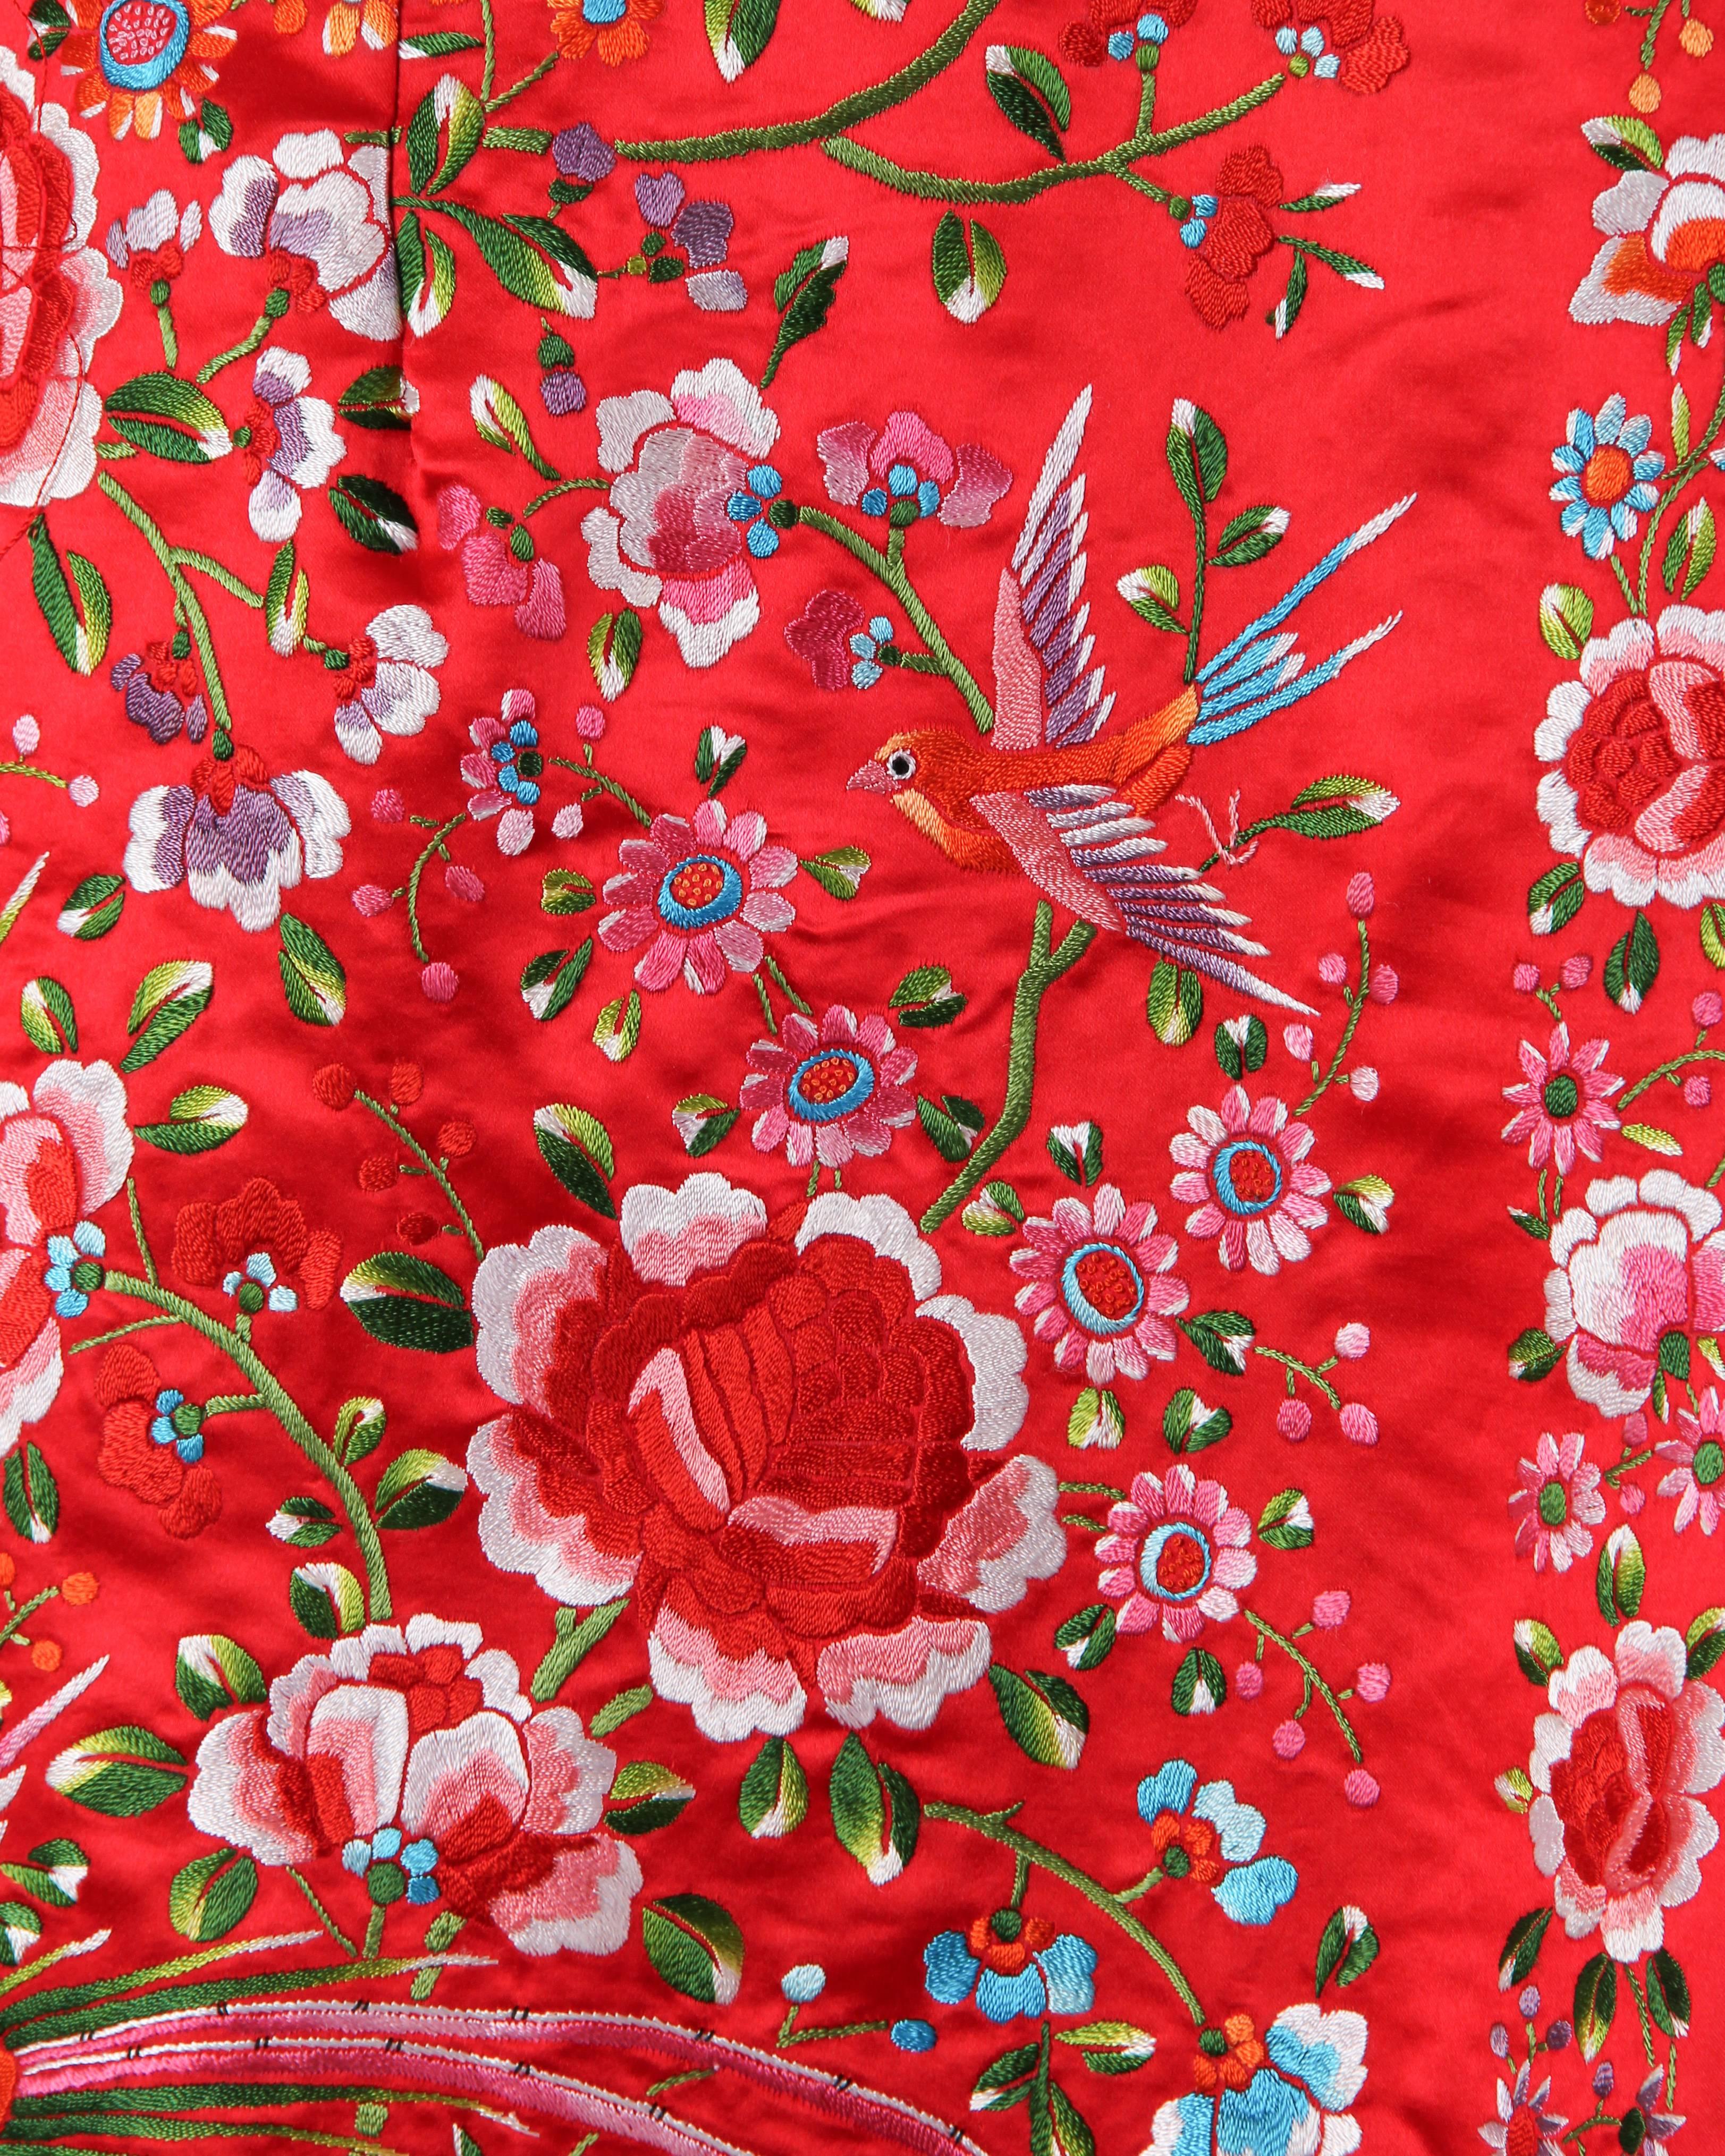 Phenomenal Hand-Embroidered Chinese Shawl Dress with Fringe 6